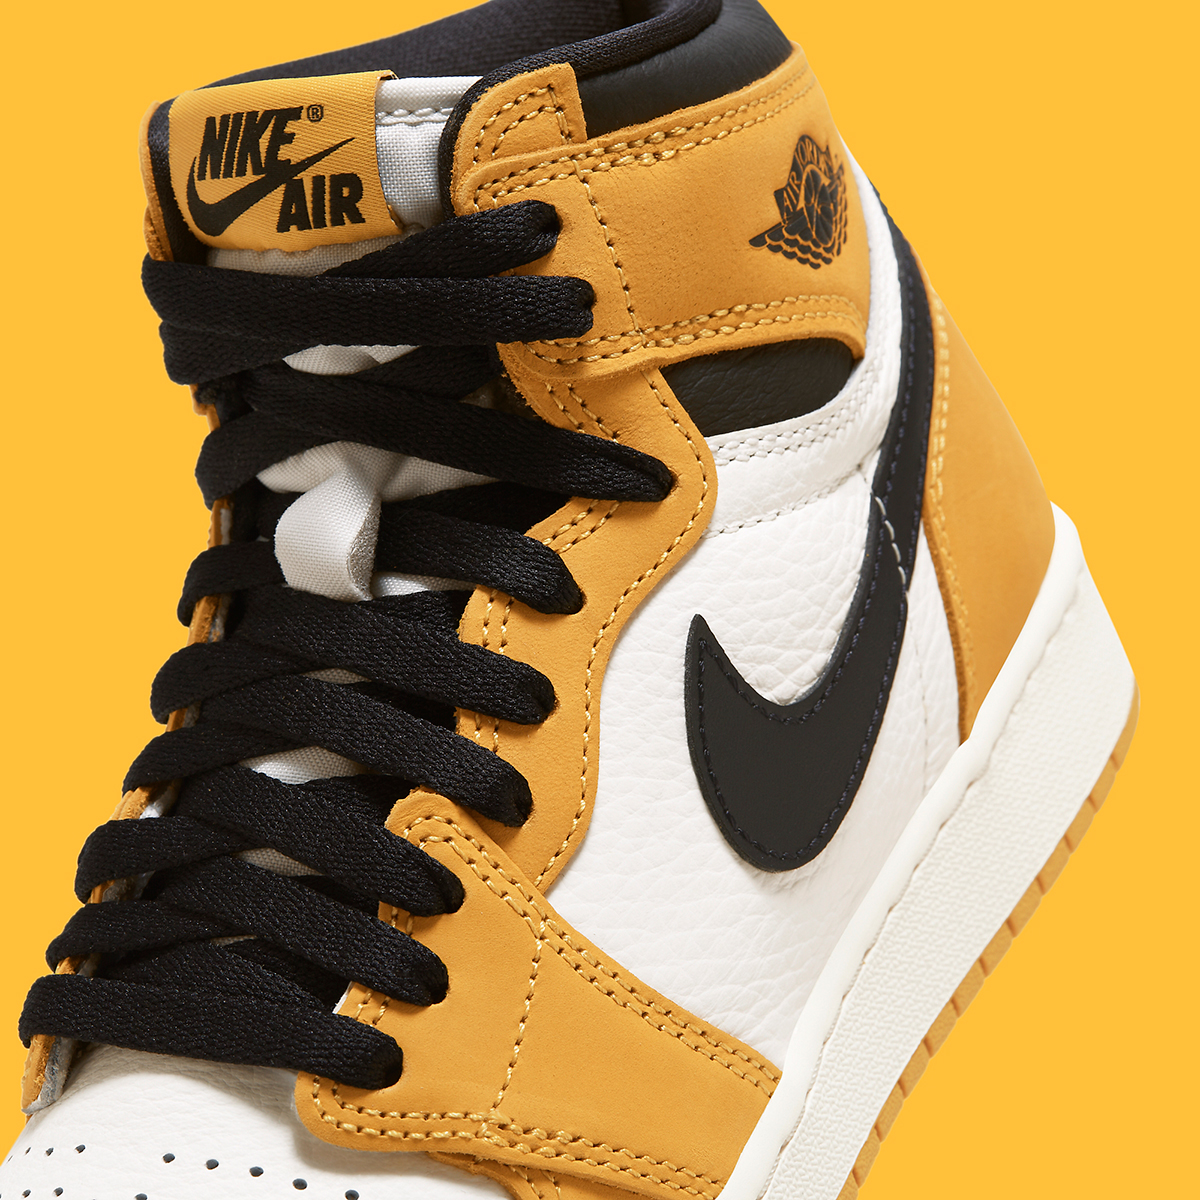 The Air Jordan 1 Yellow Ochre Releases Soon | Sneaker News